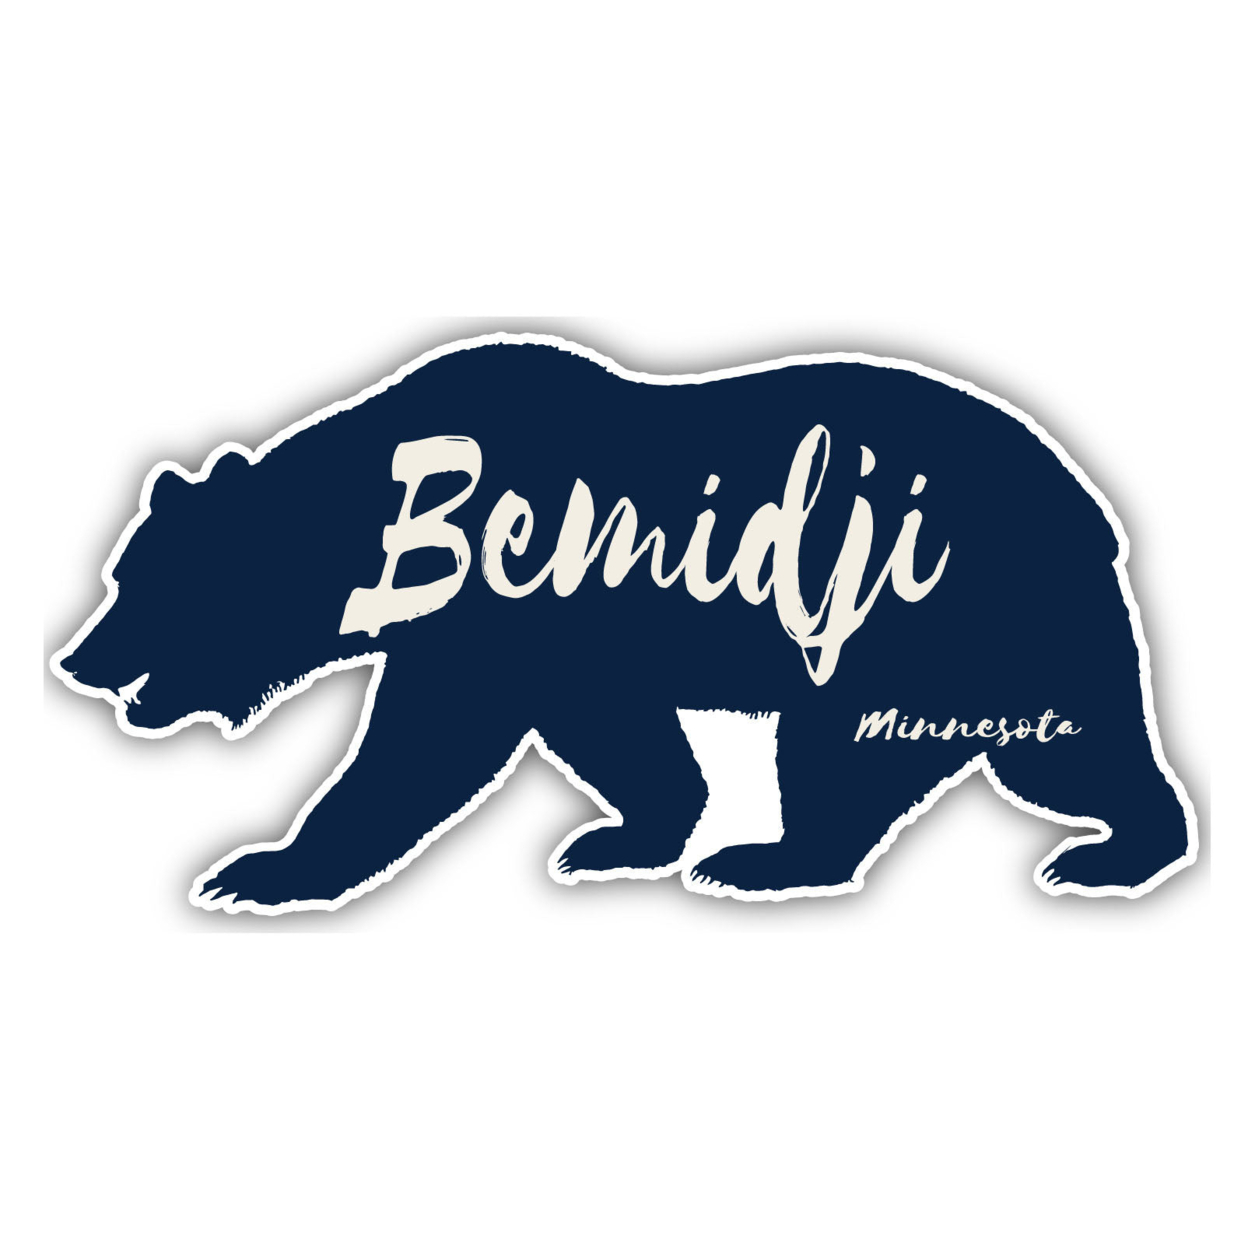 Bemidji Minnesota Souvenir Decorative Stickers (Choose Theme And Size) - Single Unit, 8-Inch, Adventures Awaits